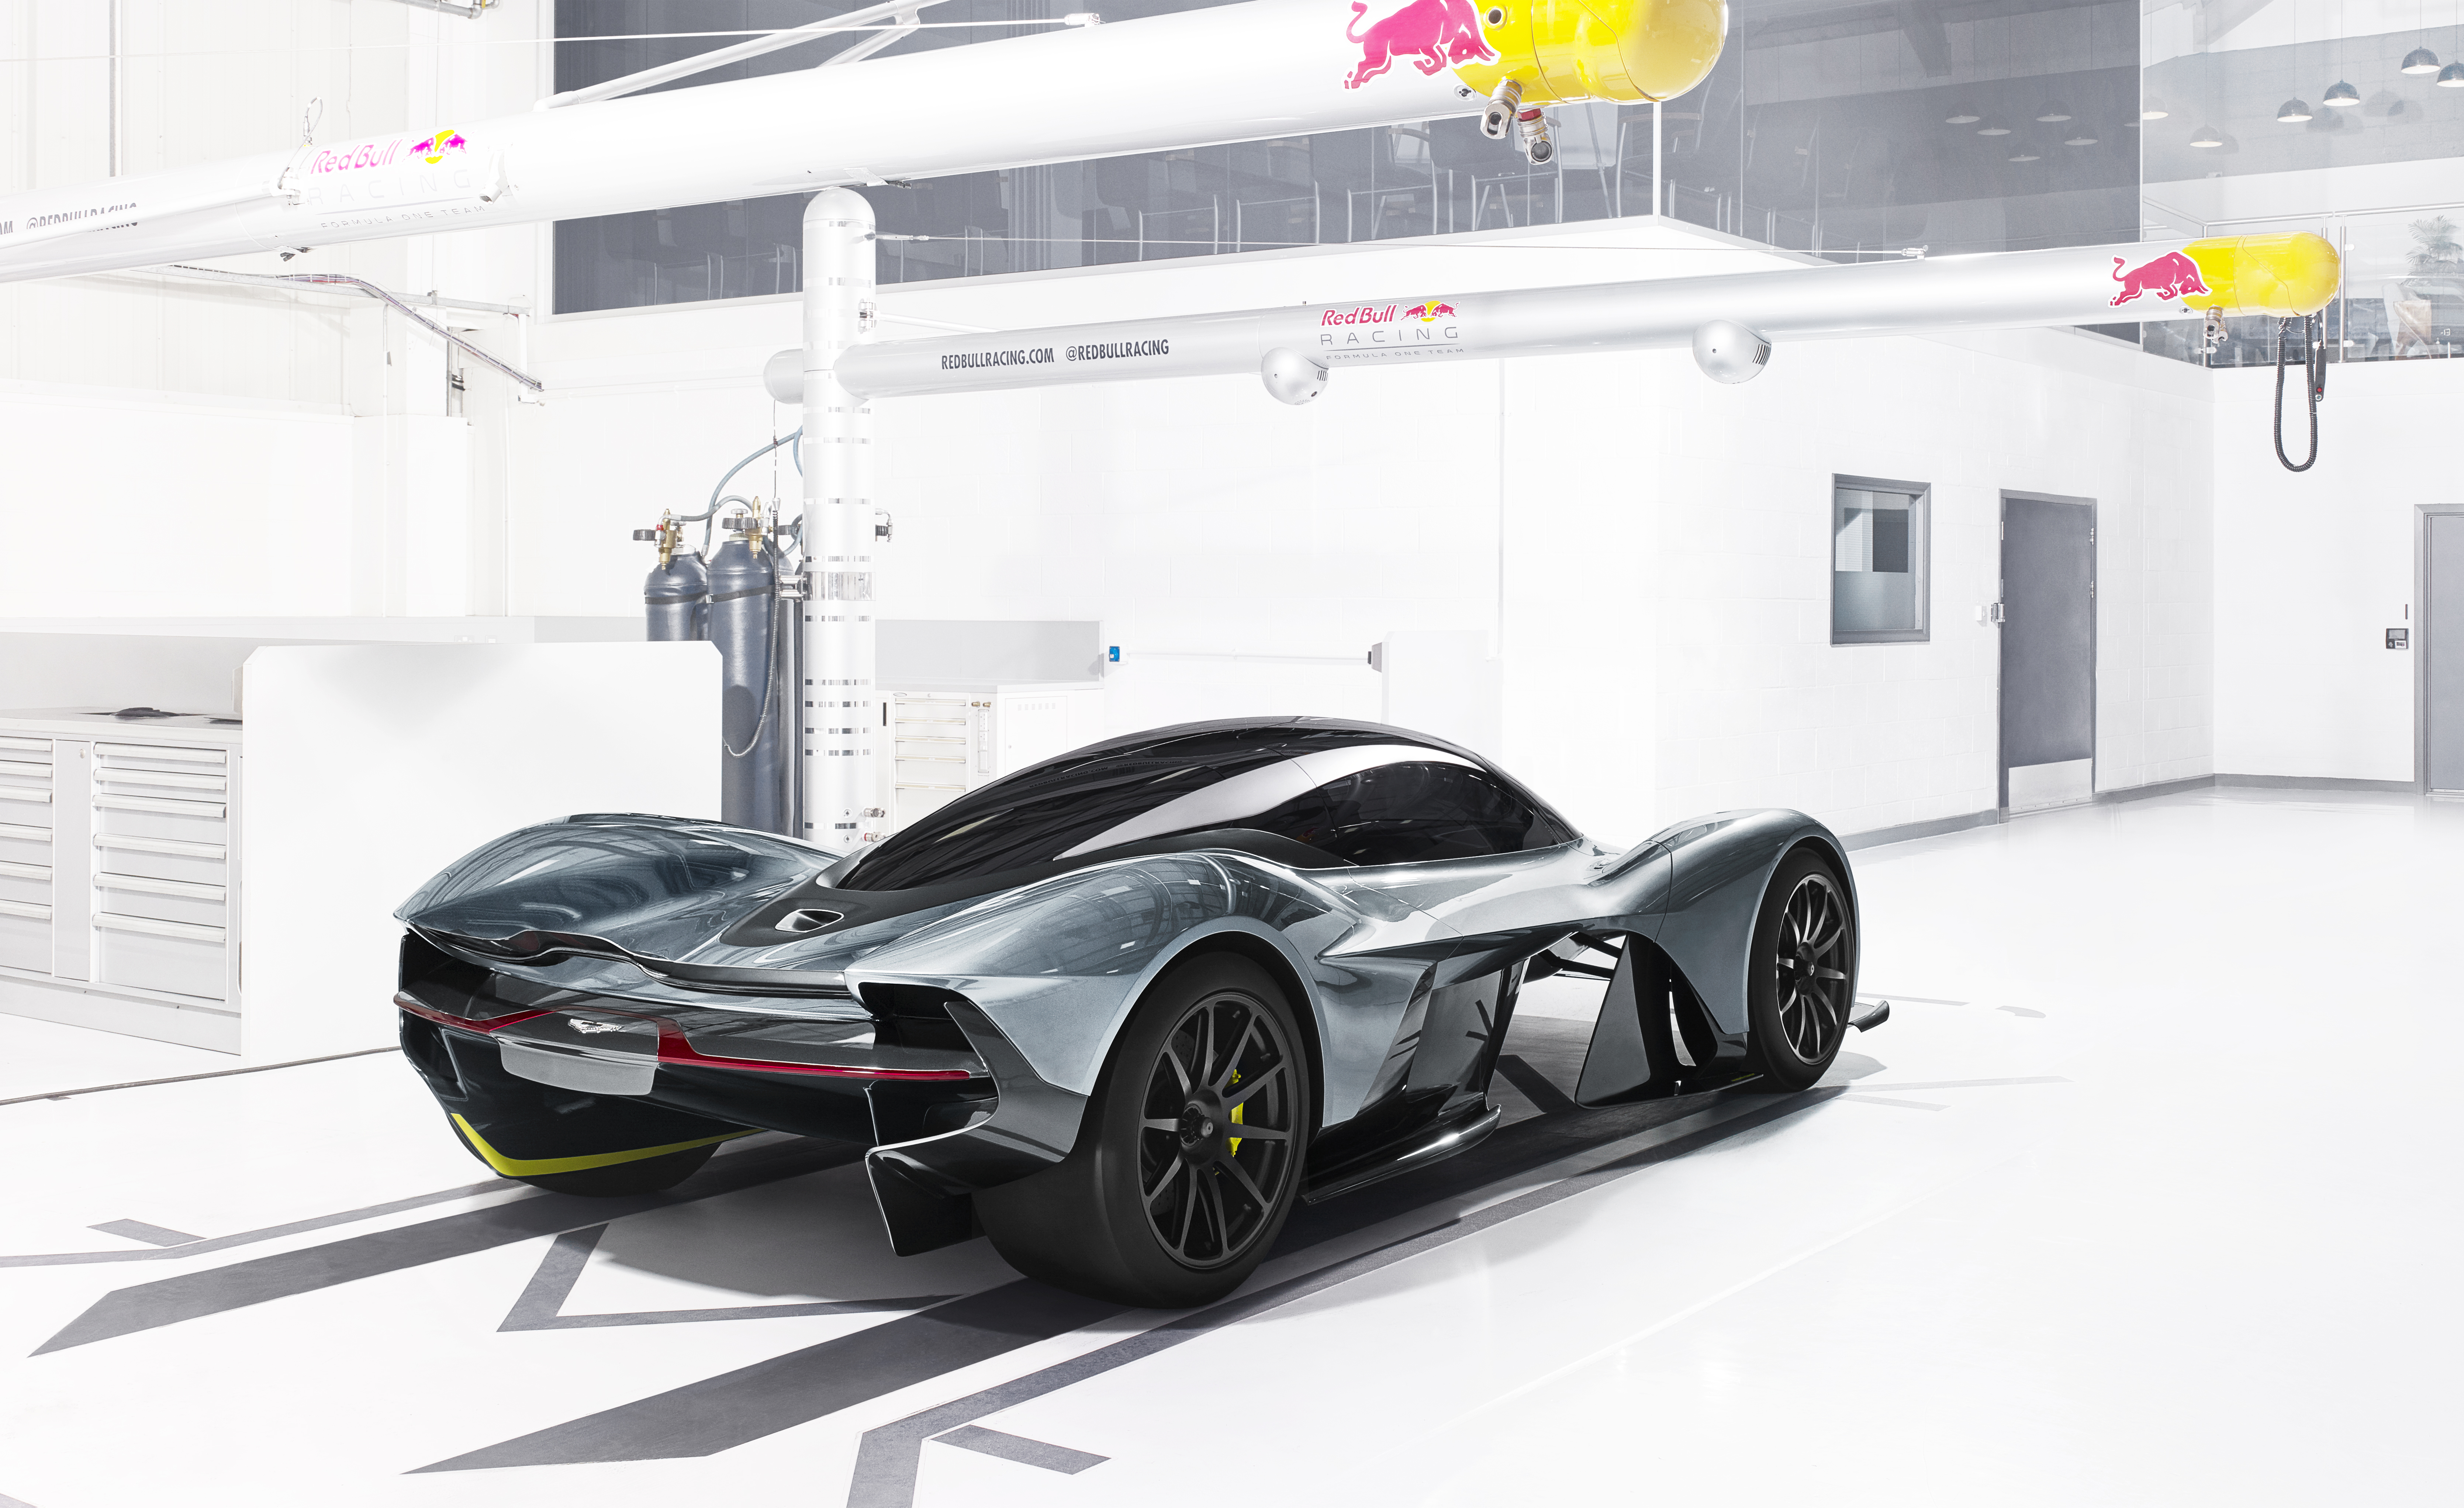 Aston and Red Bull Racing unveil radical AM-RB 001 hypercar – Aston Martin Pressroom